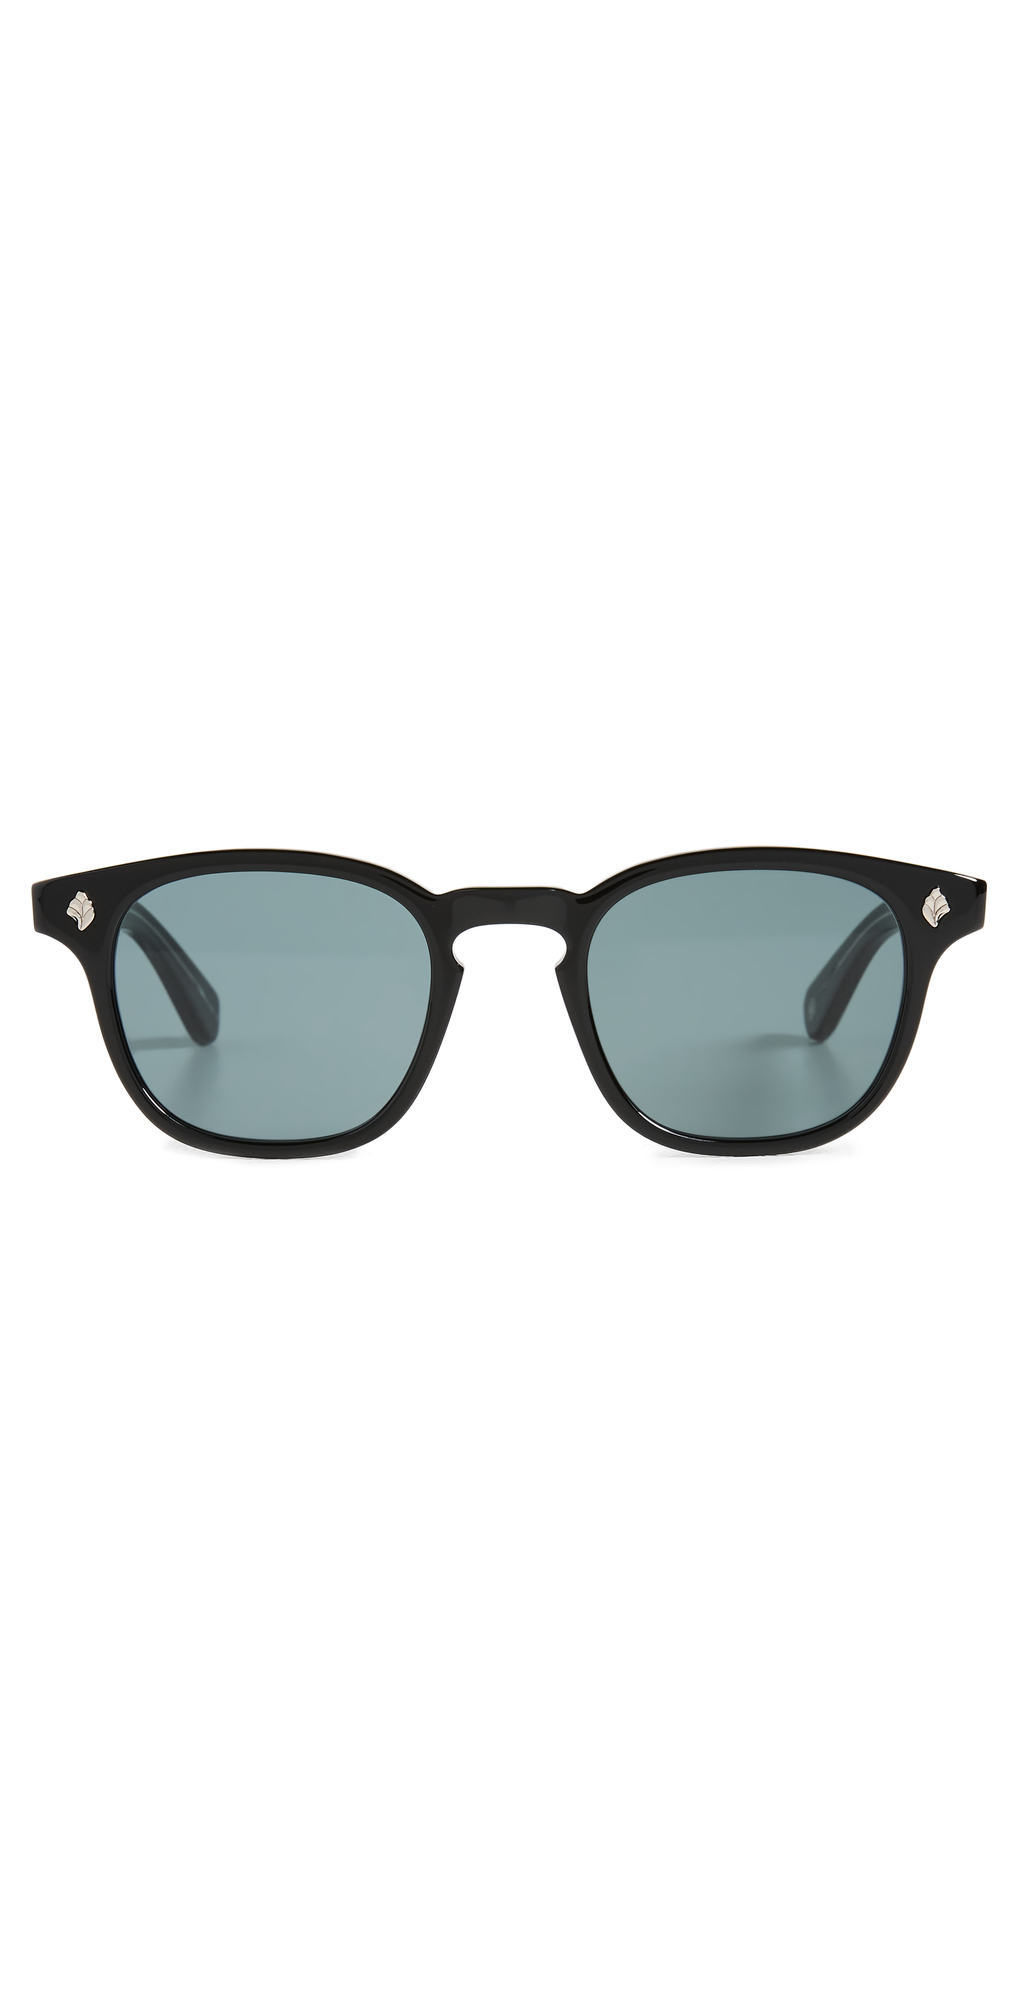 GARRETT LEIGHT Ace Sunglasses in black